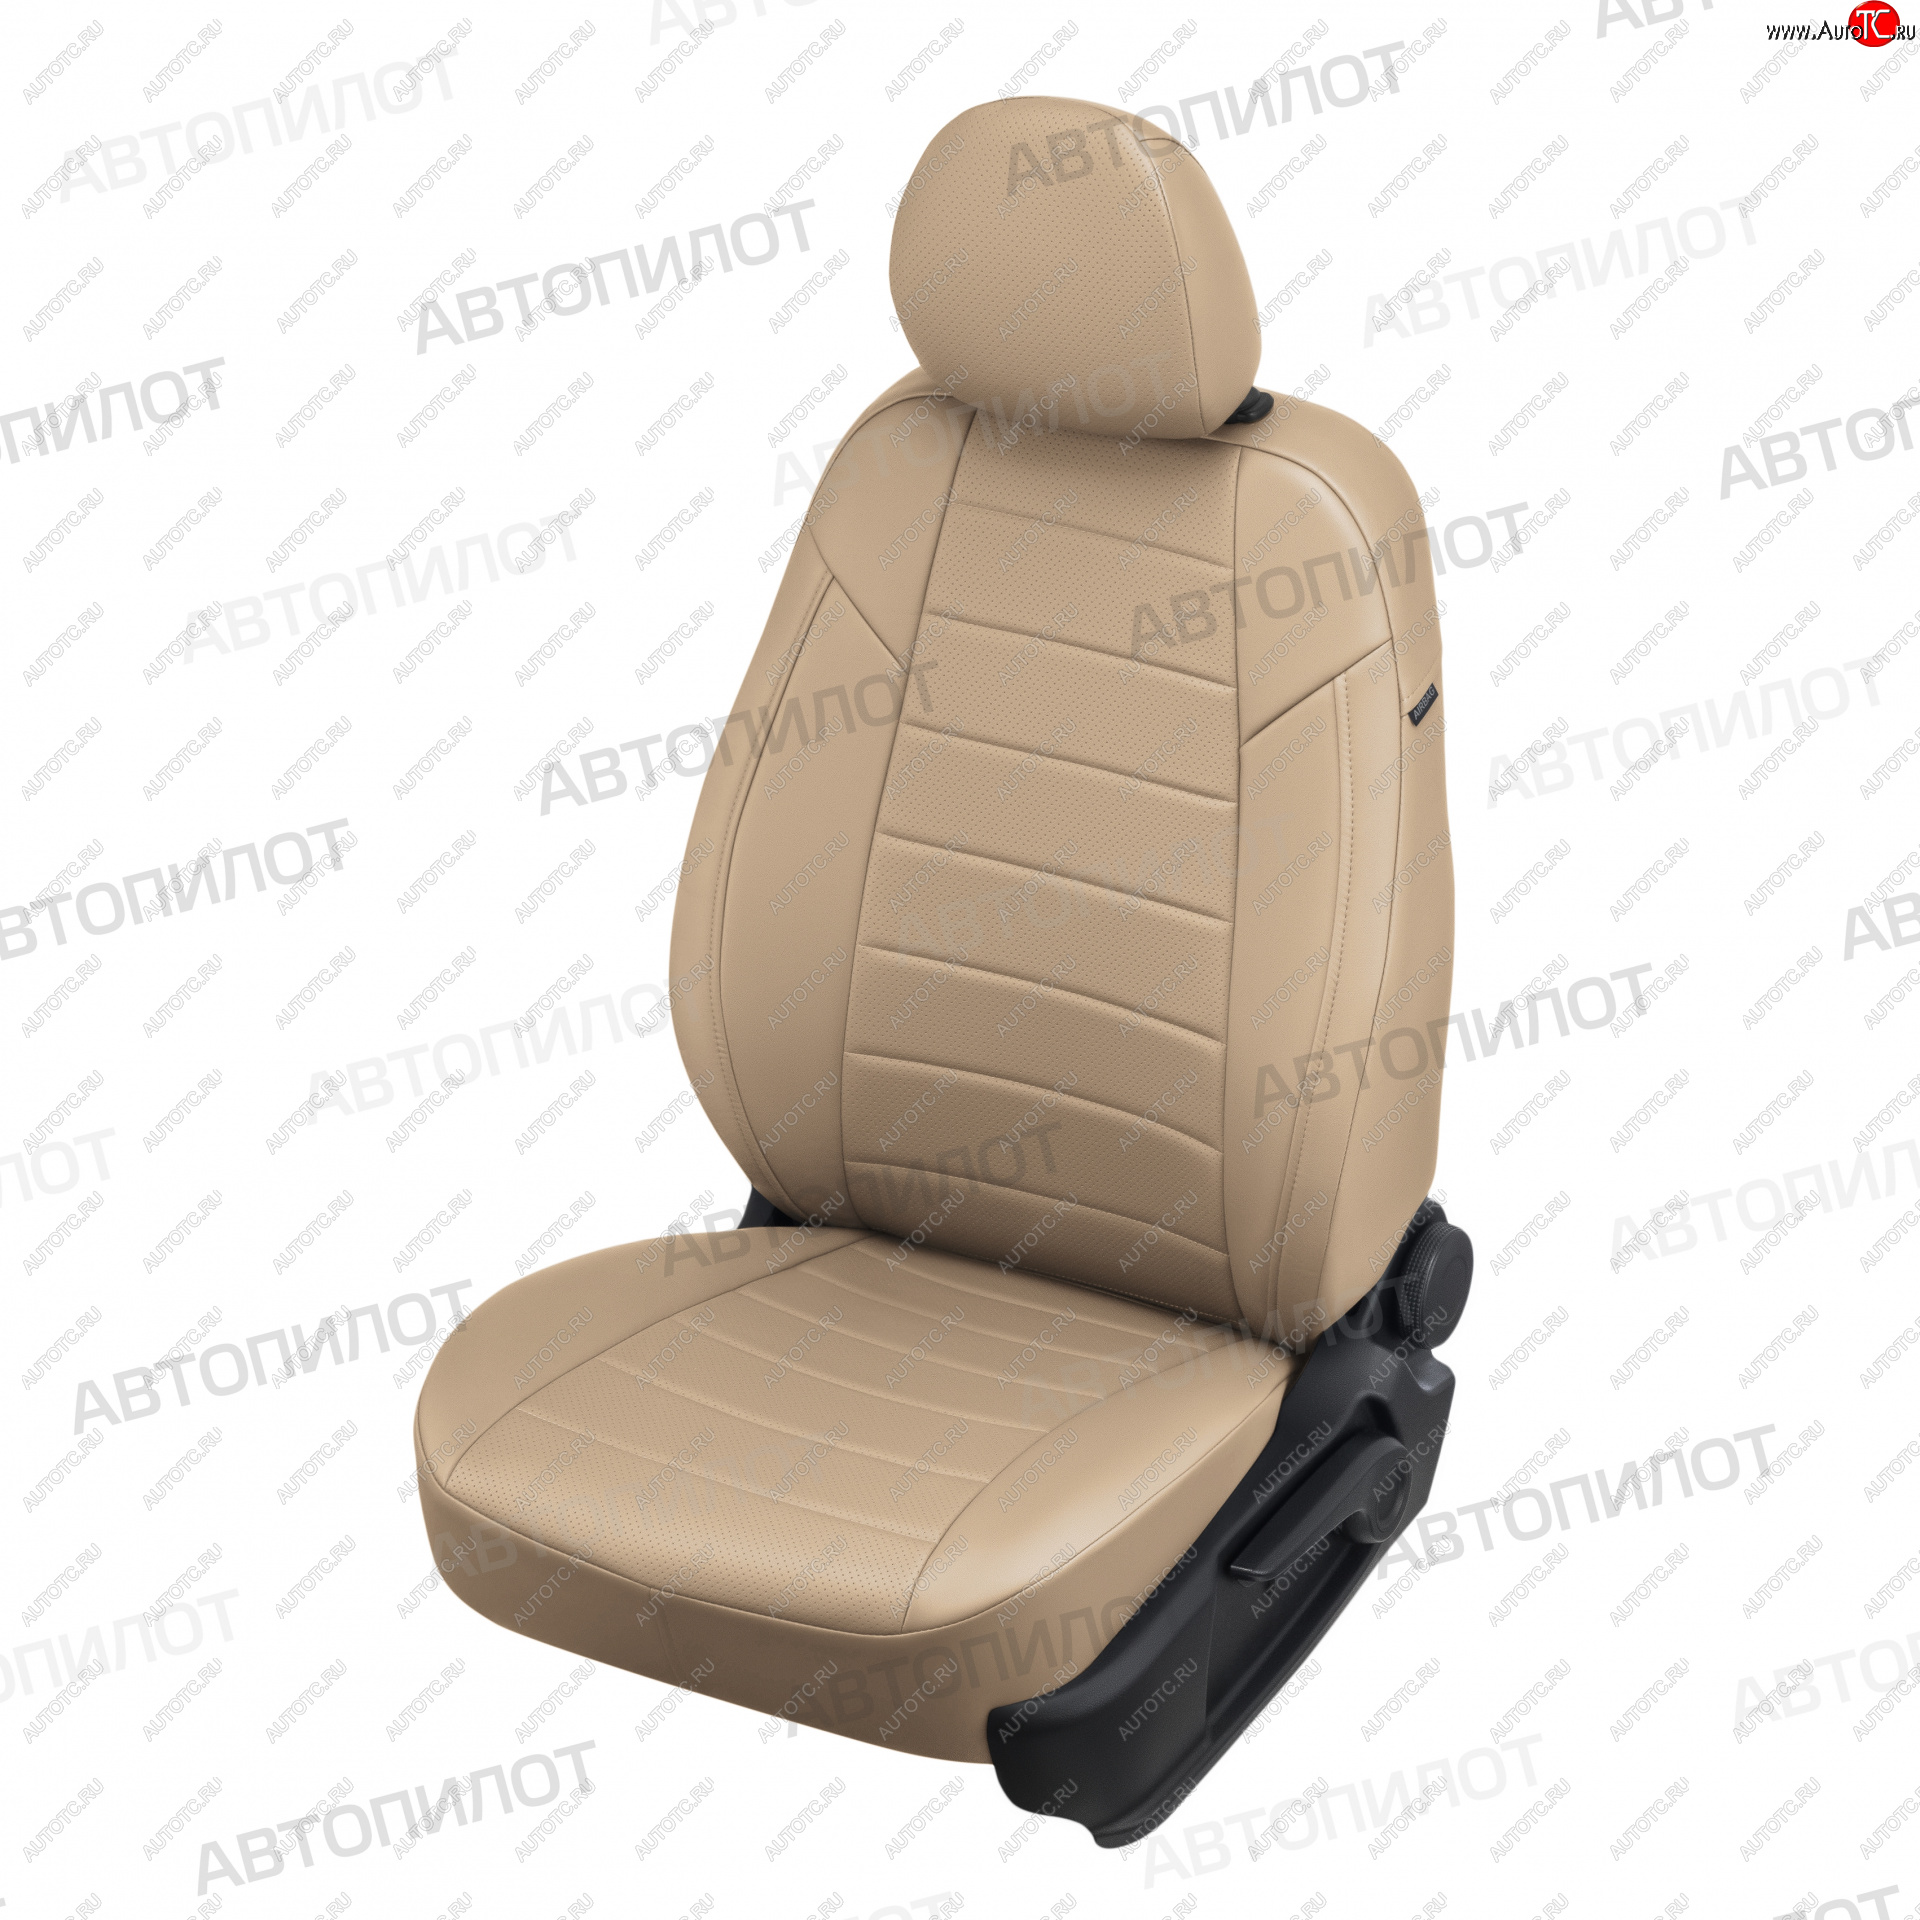 13 849 р. Чехлы сидений (5 мест, экокожа) Автопилот  Ford Galaxy  WGR (1995-2006) (темно-бежевый)